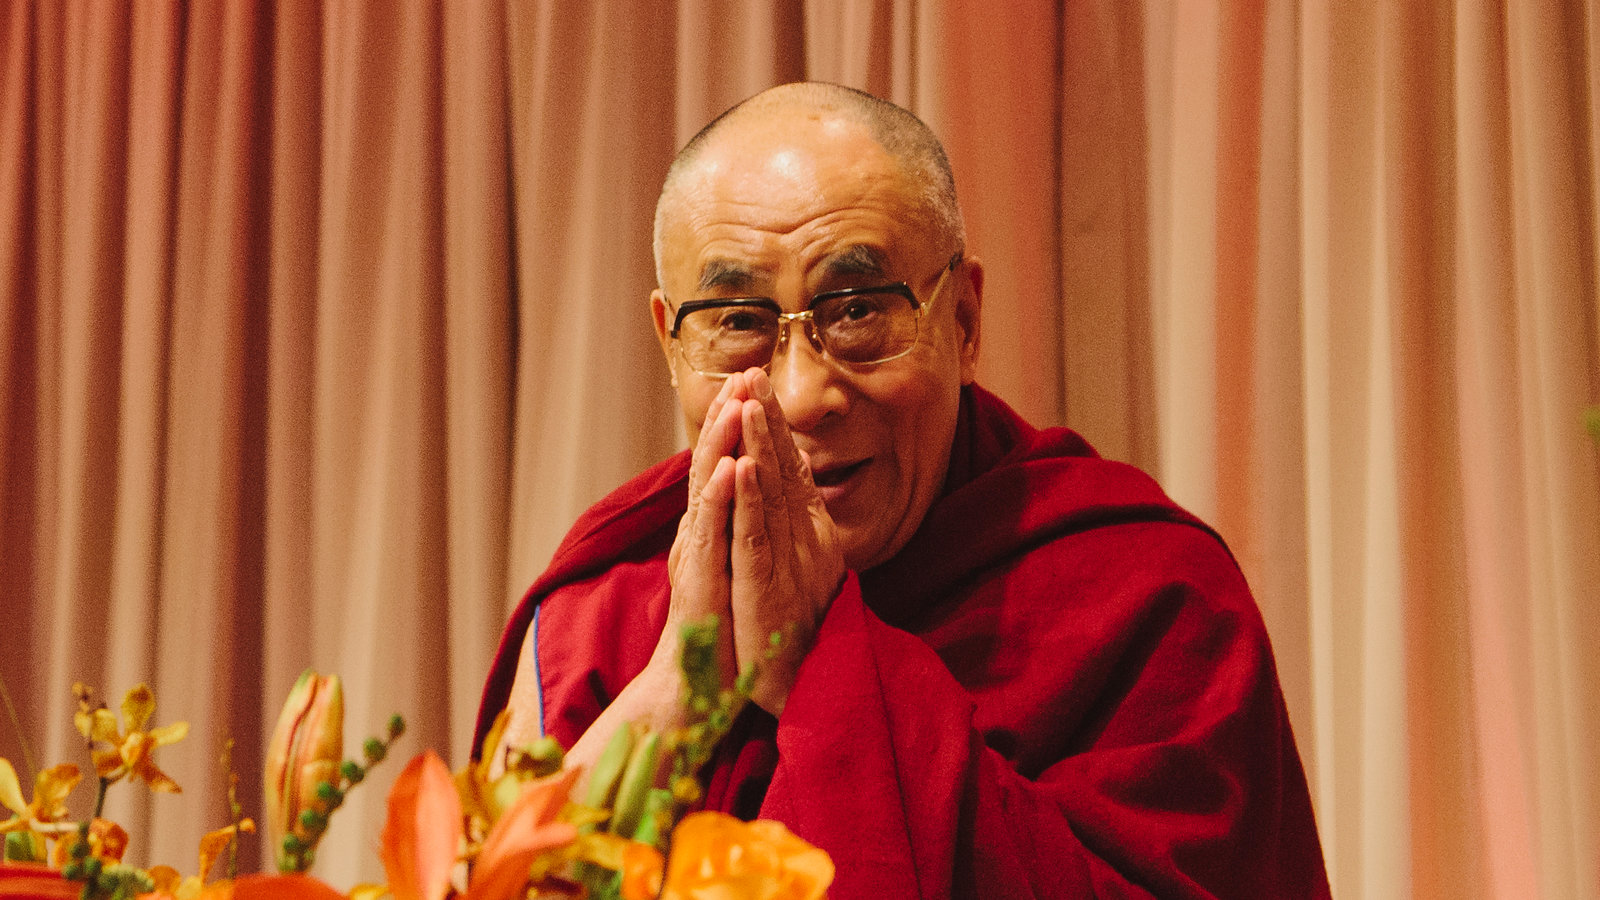 Lhamo Thondup AKA Dalai Lama's biography to release in 2020.